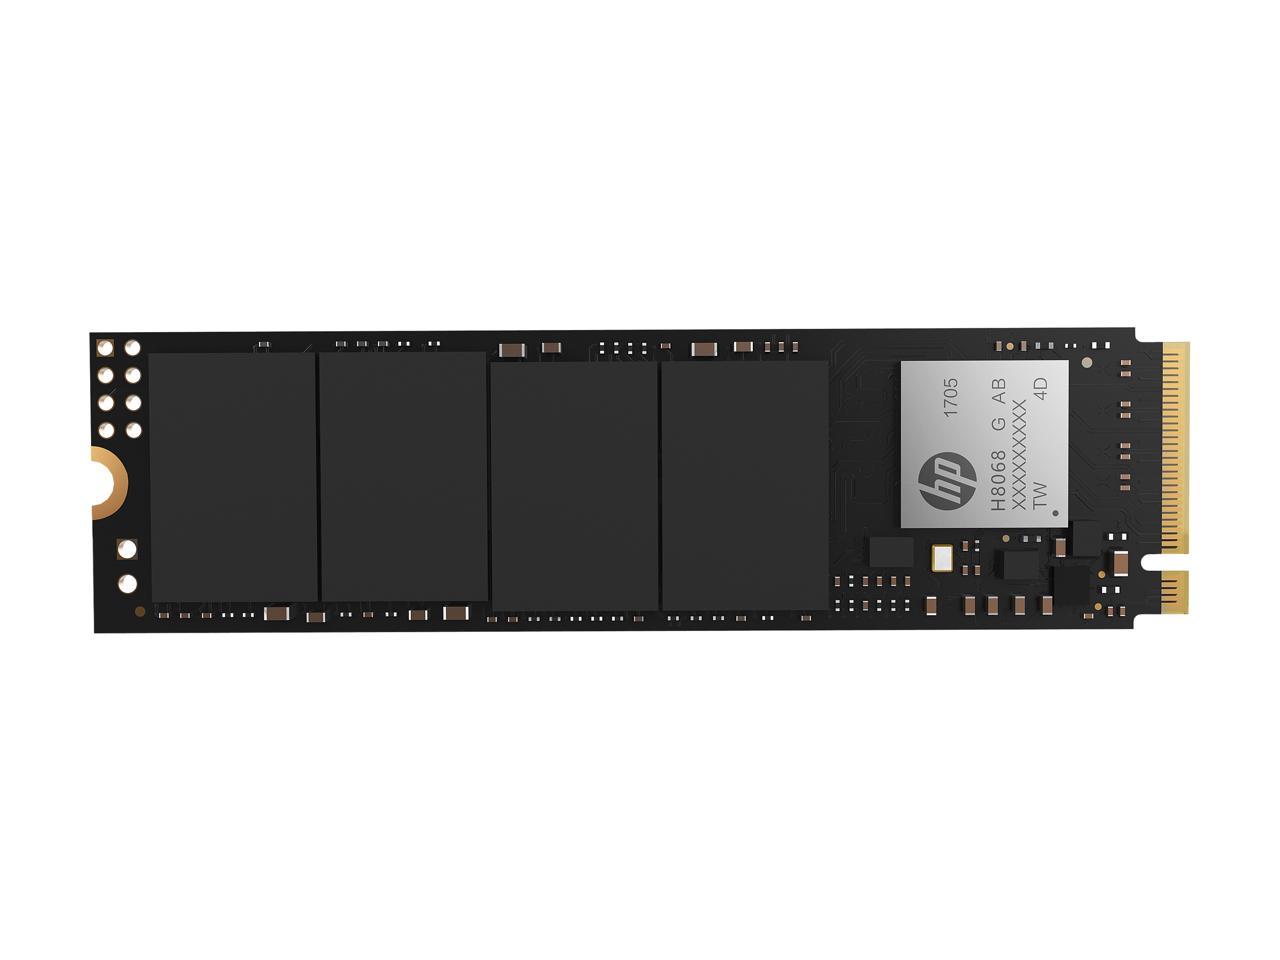 HP EX900 M.2 500GB PCIe 3.0 x4 NVMe 3D TLC NAND Internal Solid State Drive (SSD) 2YY44AA#ABC